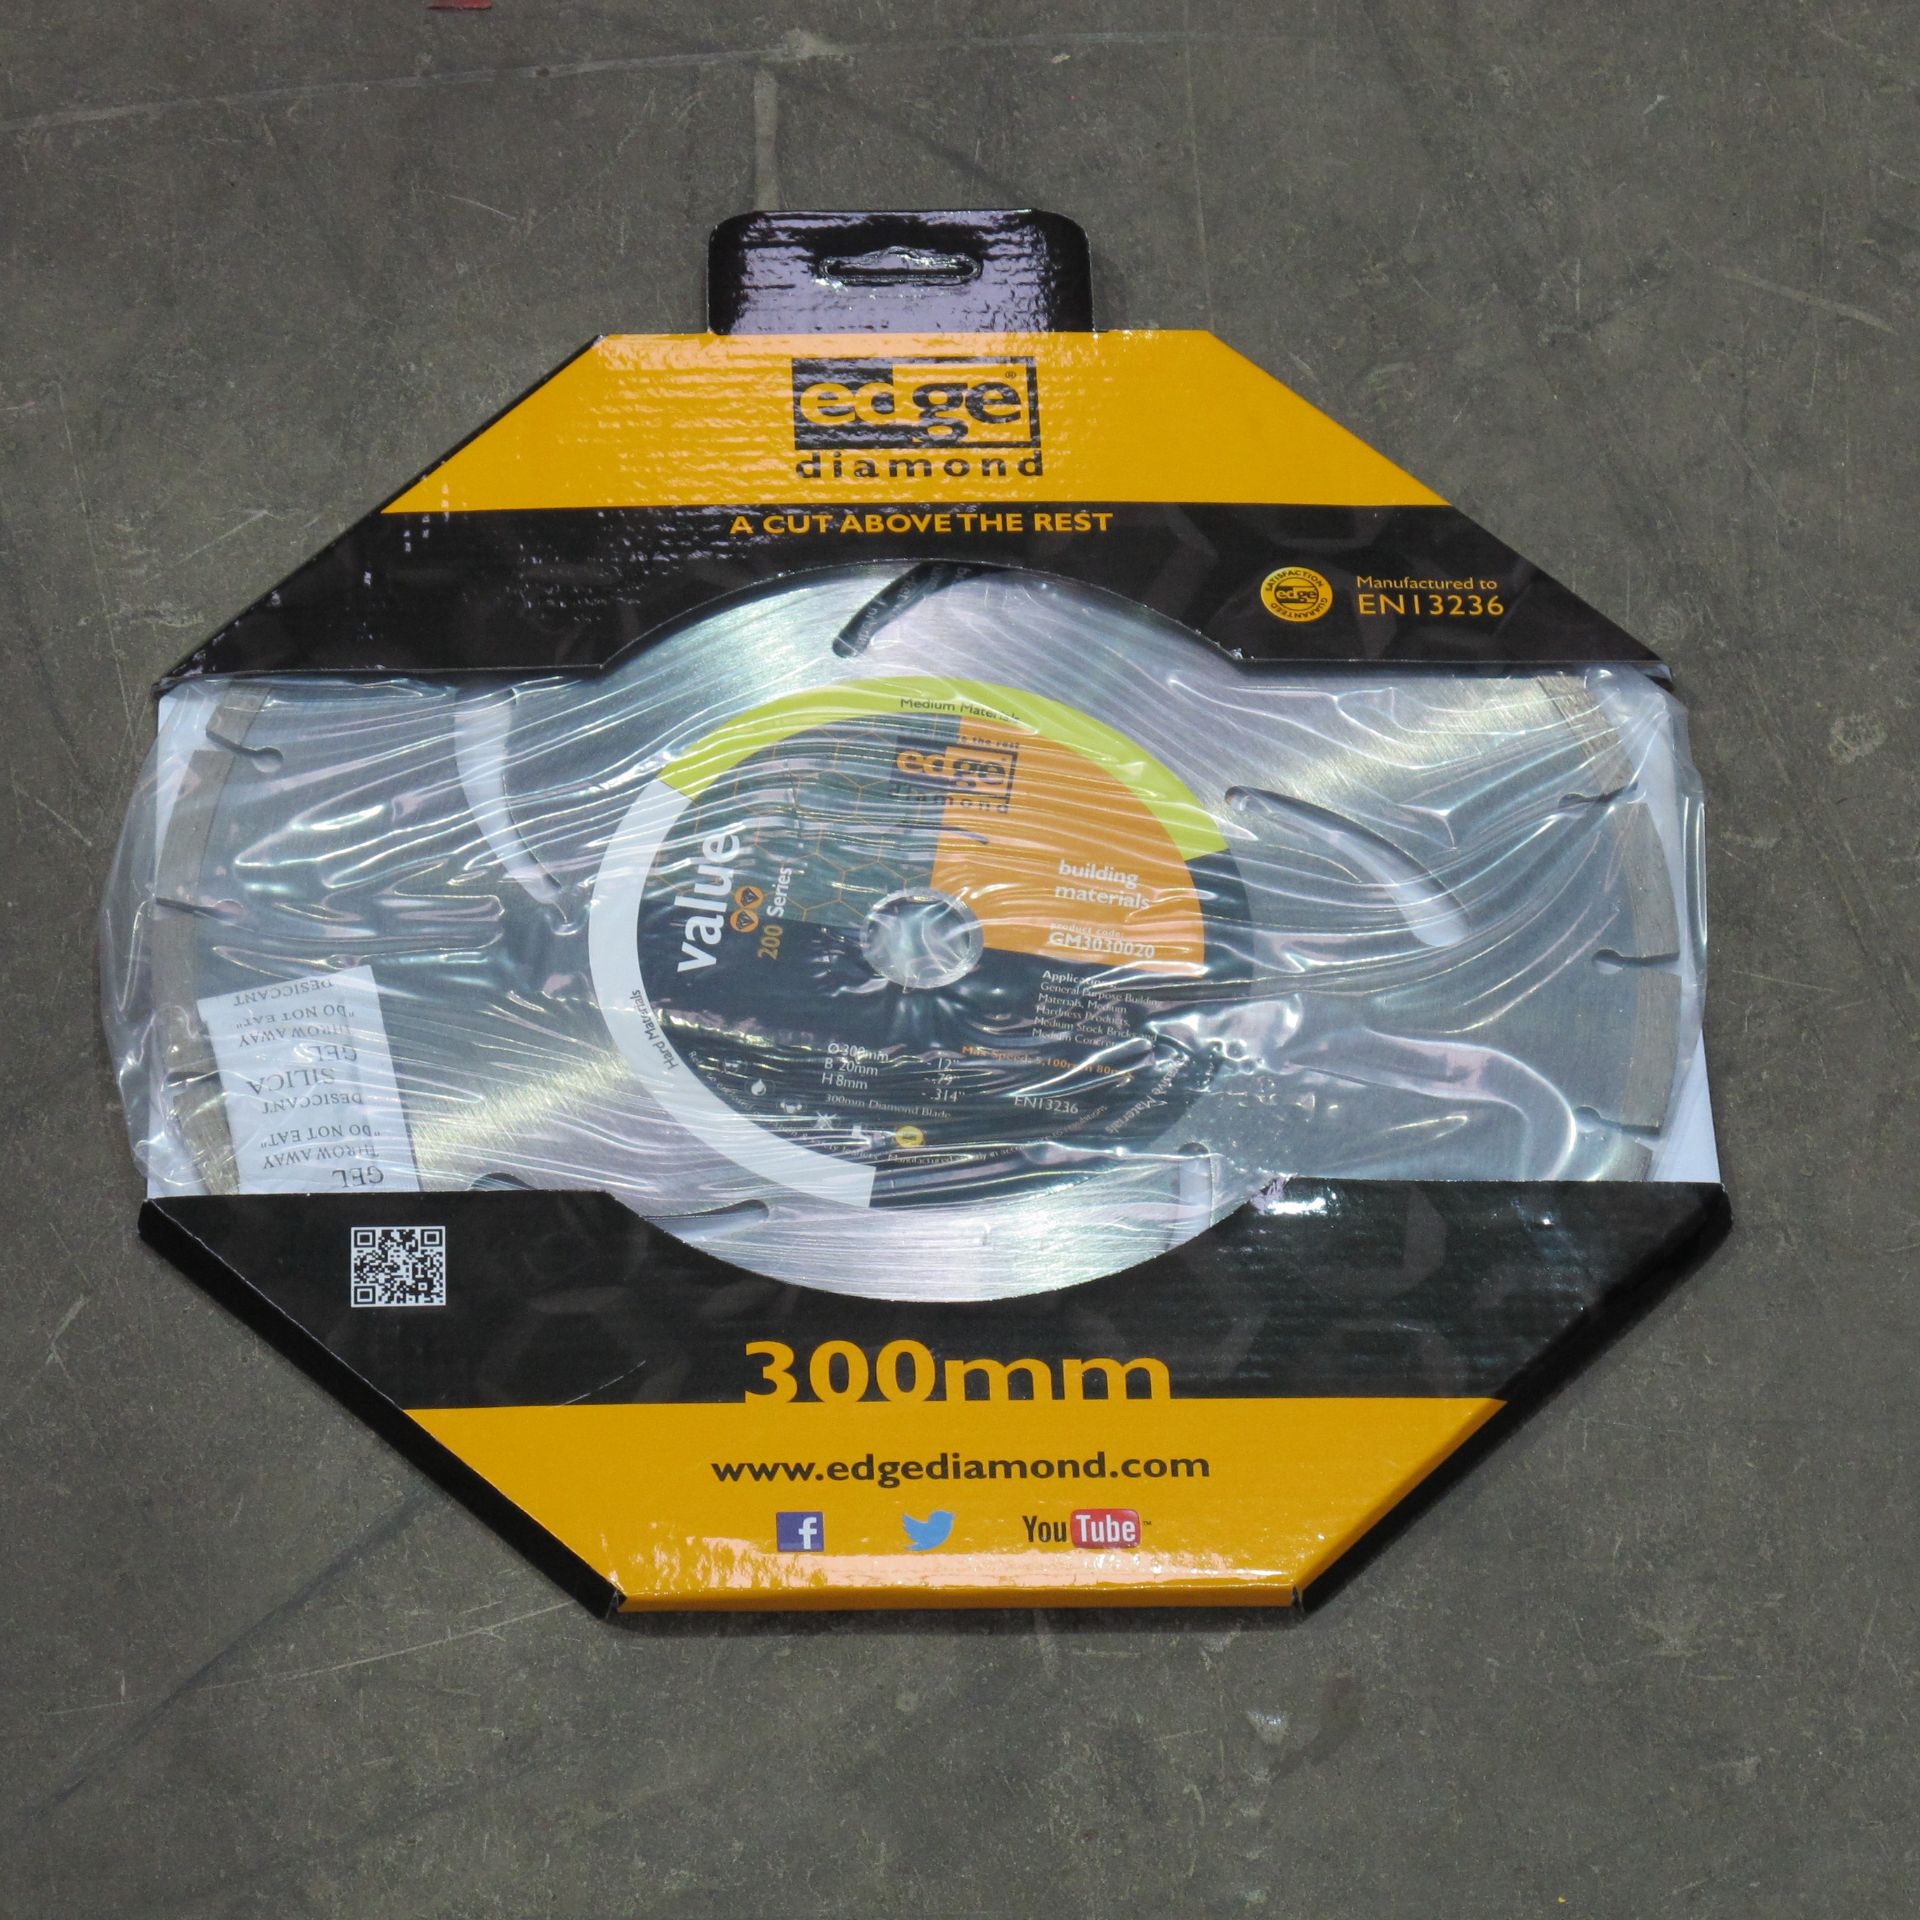 * A pack of 10 pcs of Edge Diamond 300mm 200 Series General Purpose Cutting Discs